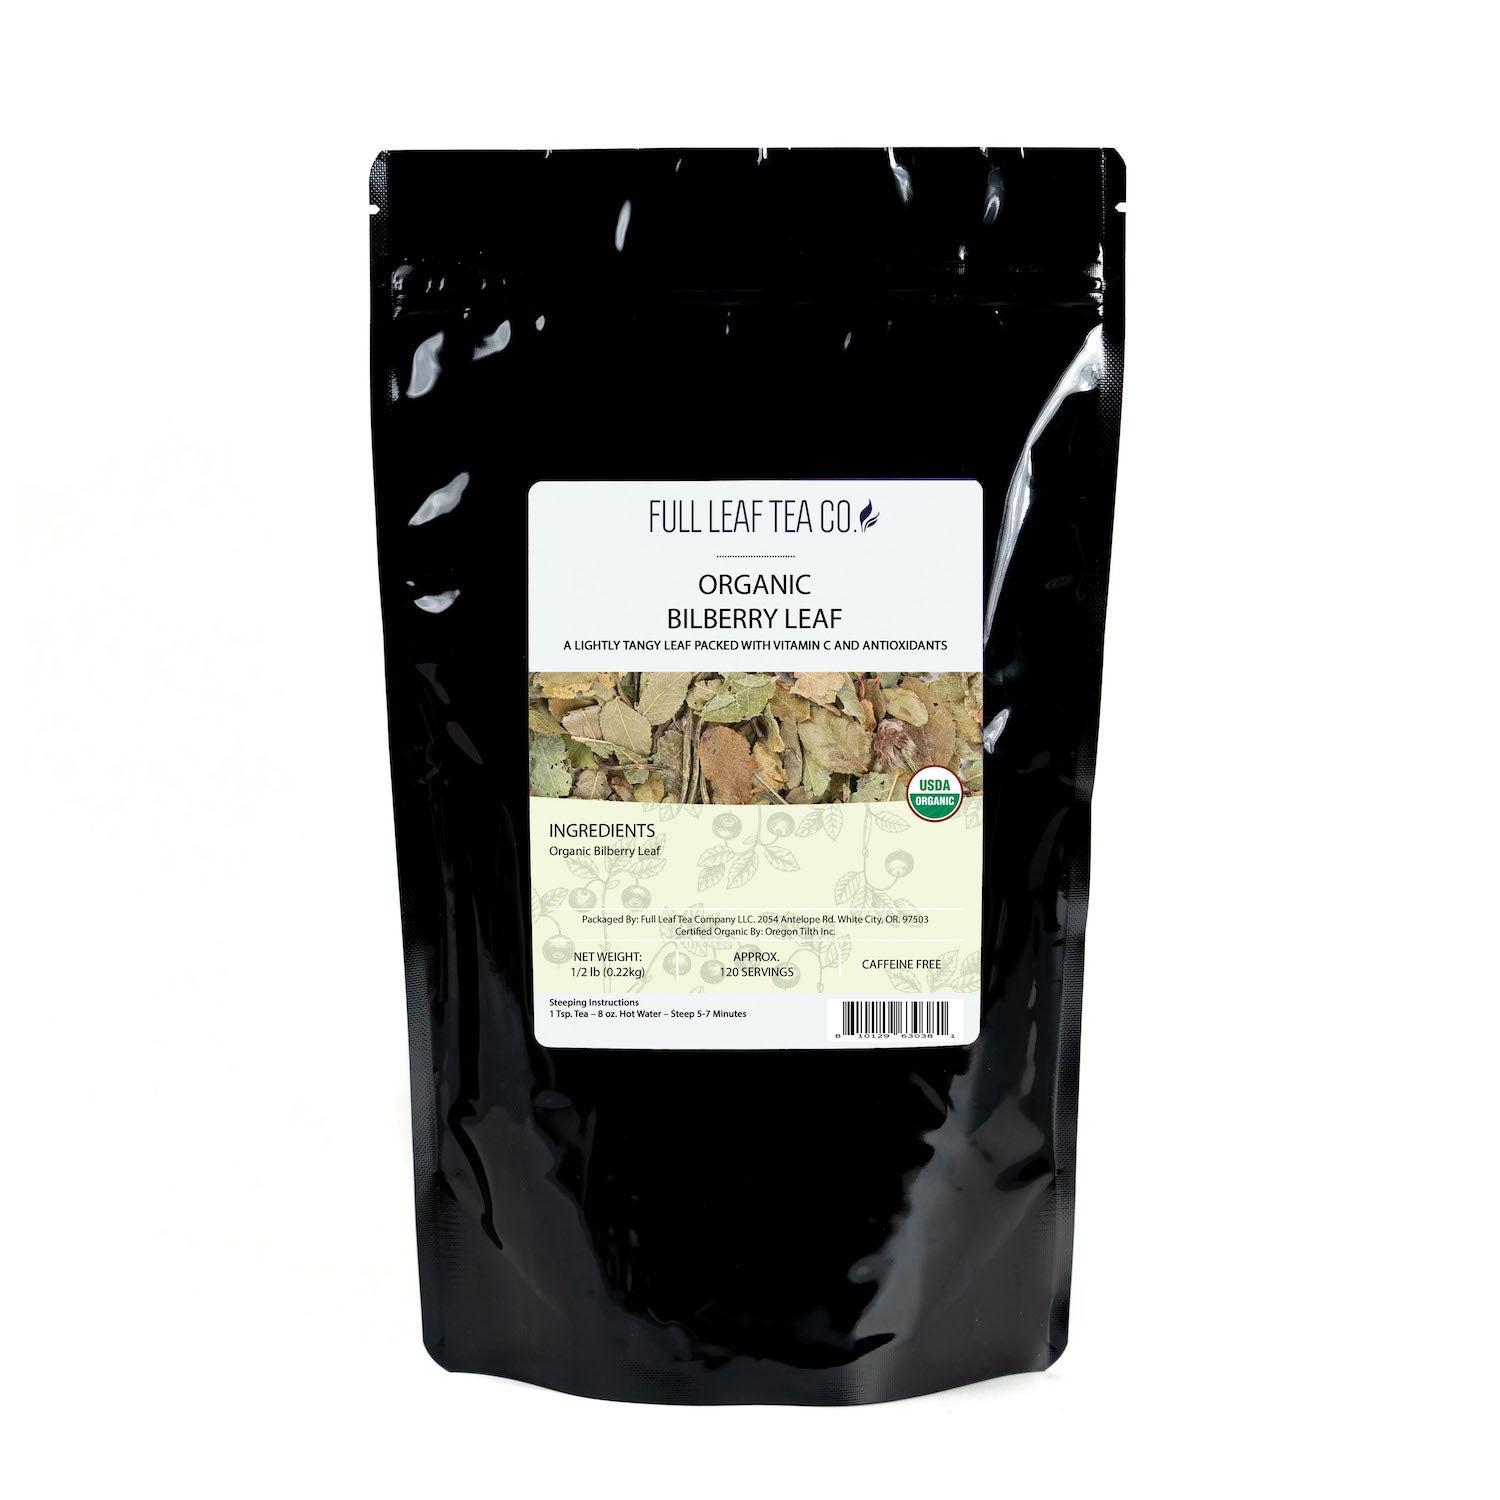 Organic Bilberry Leaf - Loose Leaf Tea - Full Leaf Tea Company